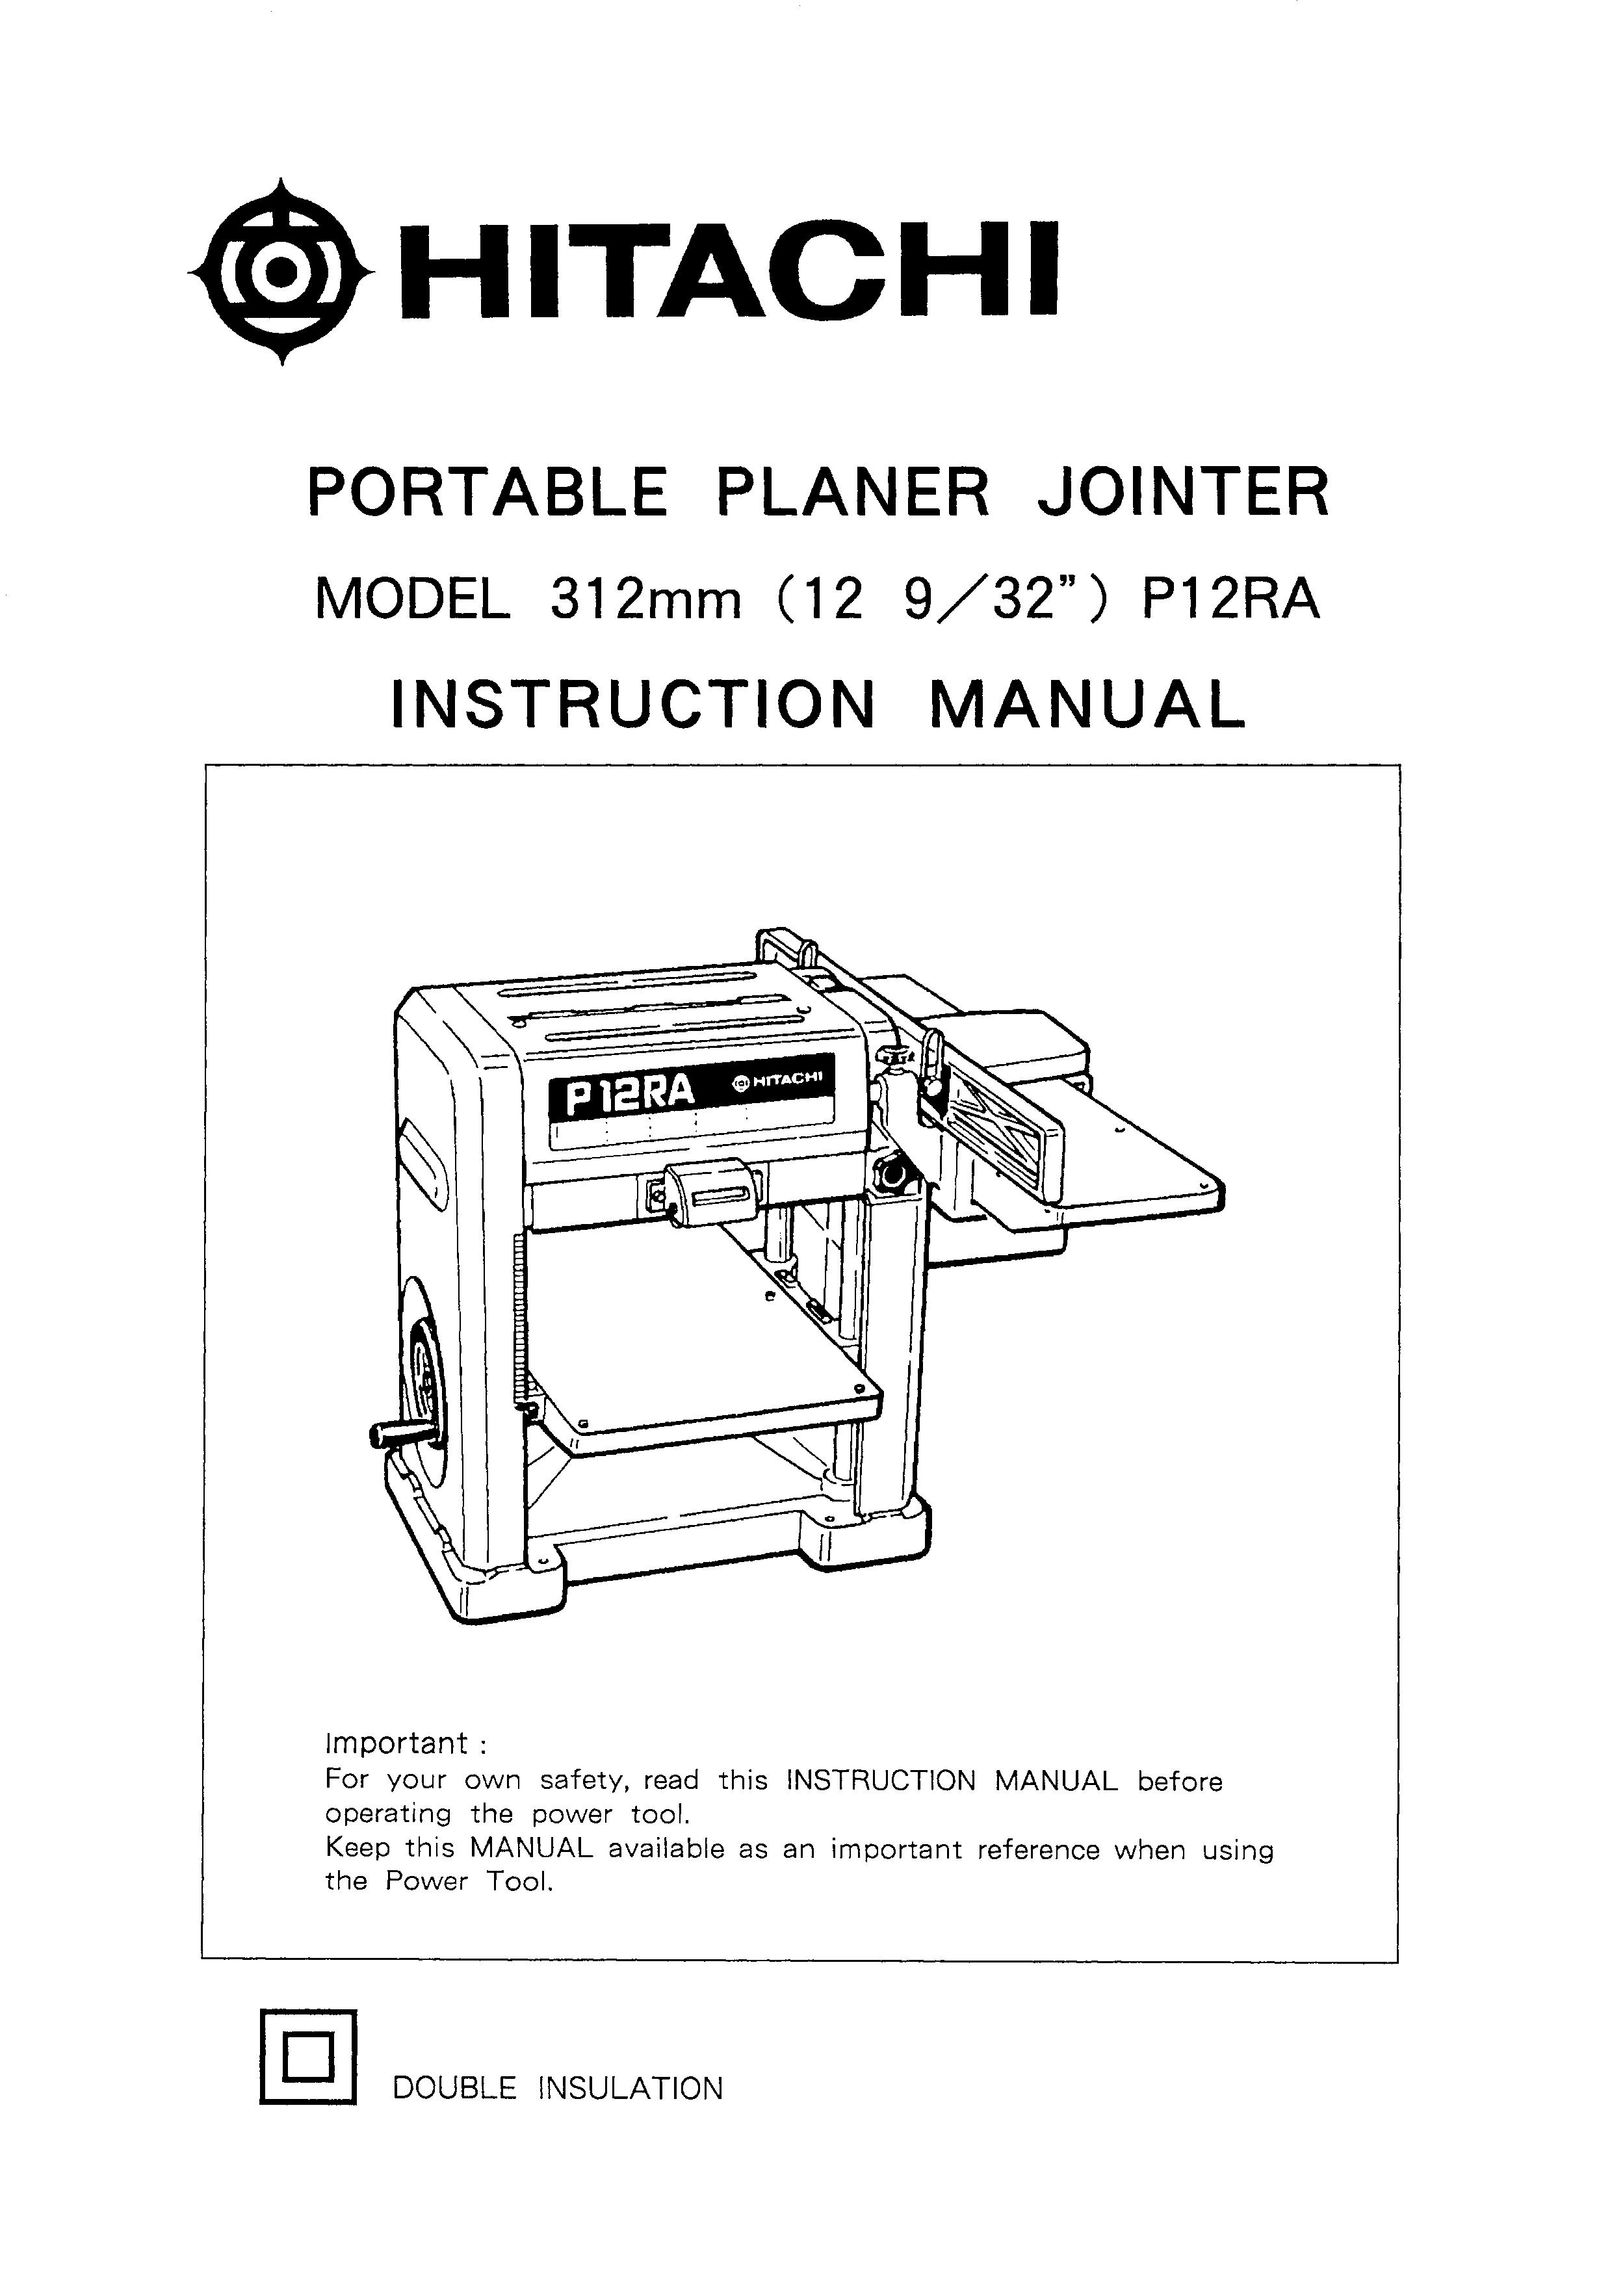 Hitachi P12RA Planer User Manual